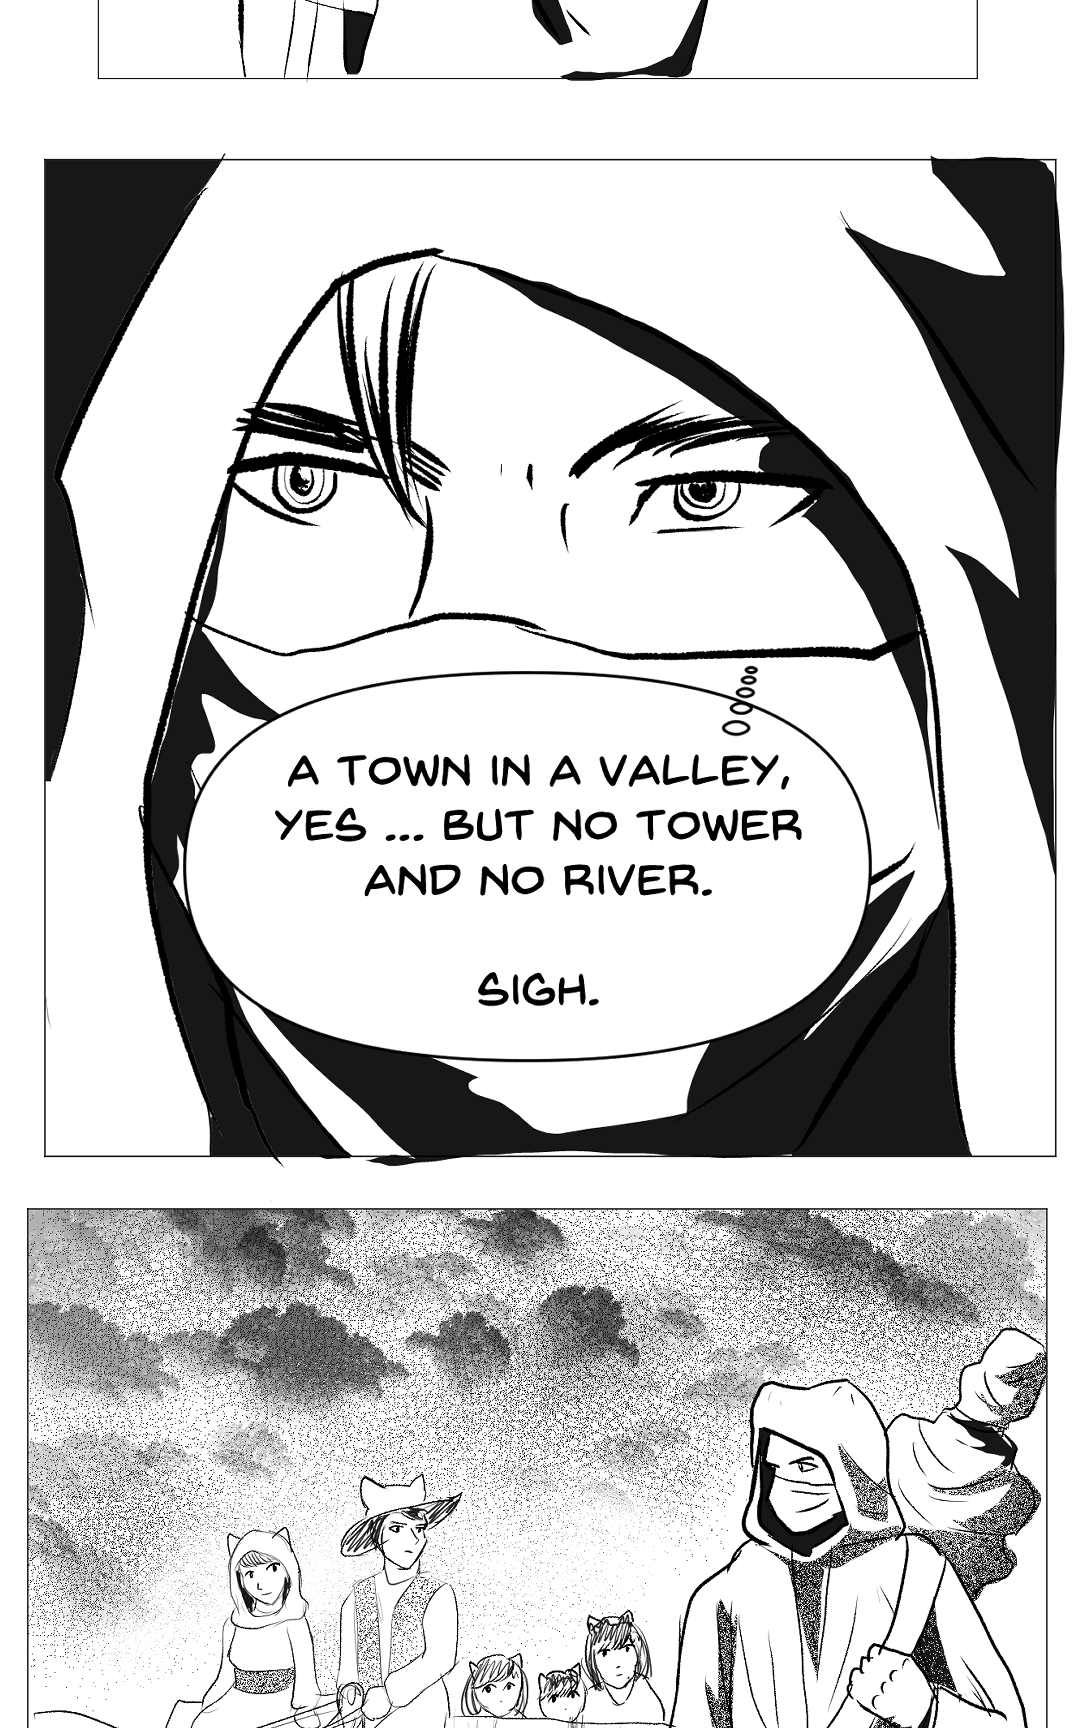 A stranger arrives panel 3